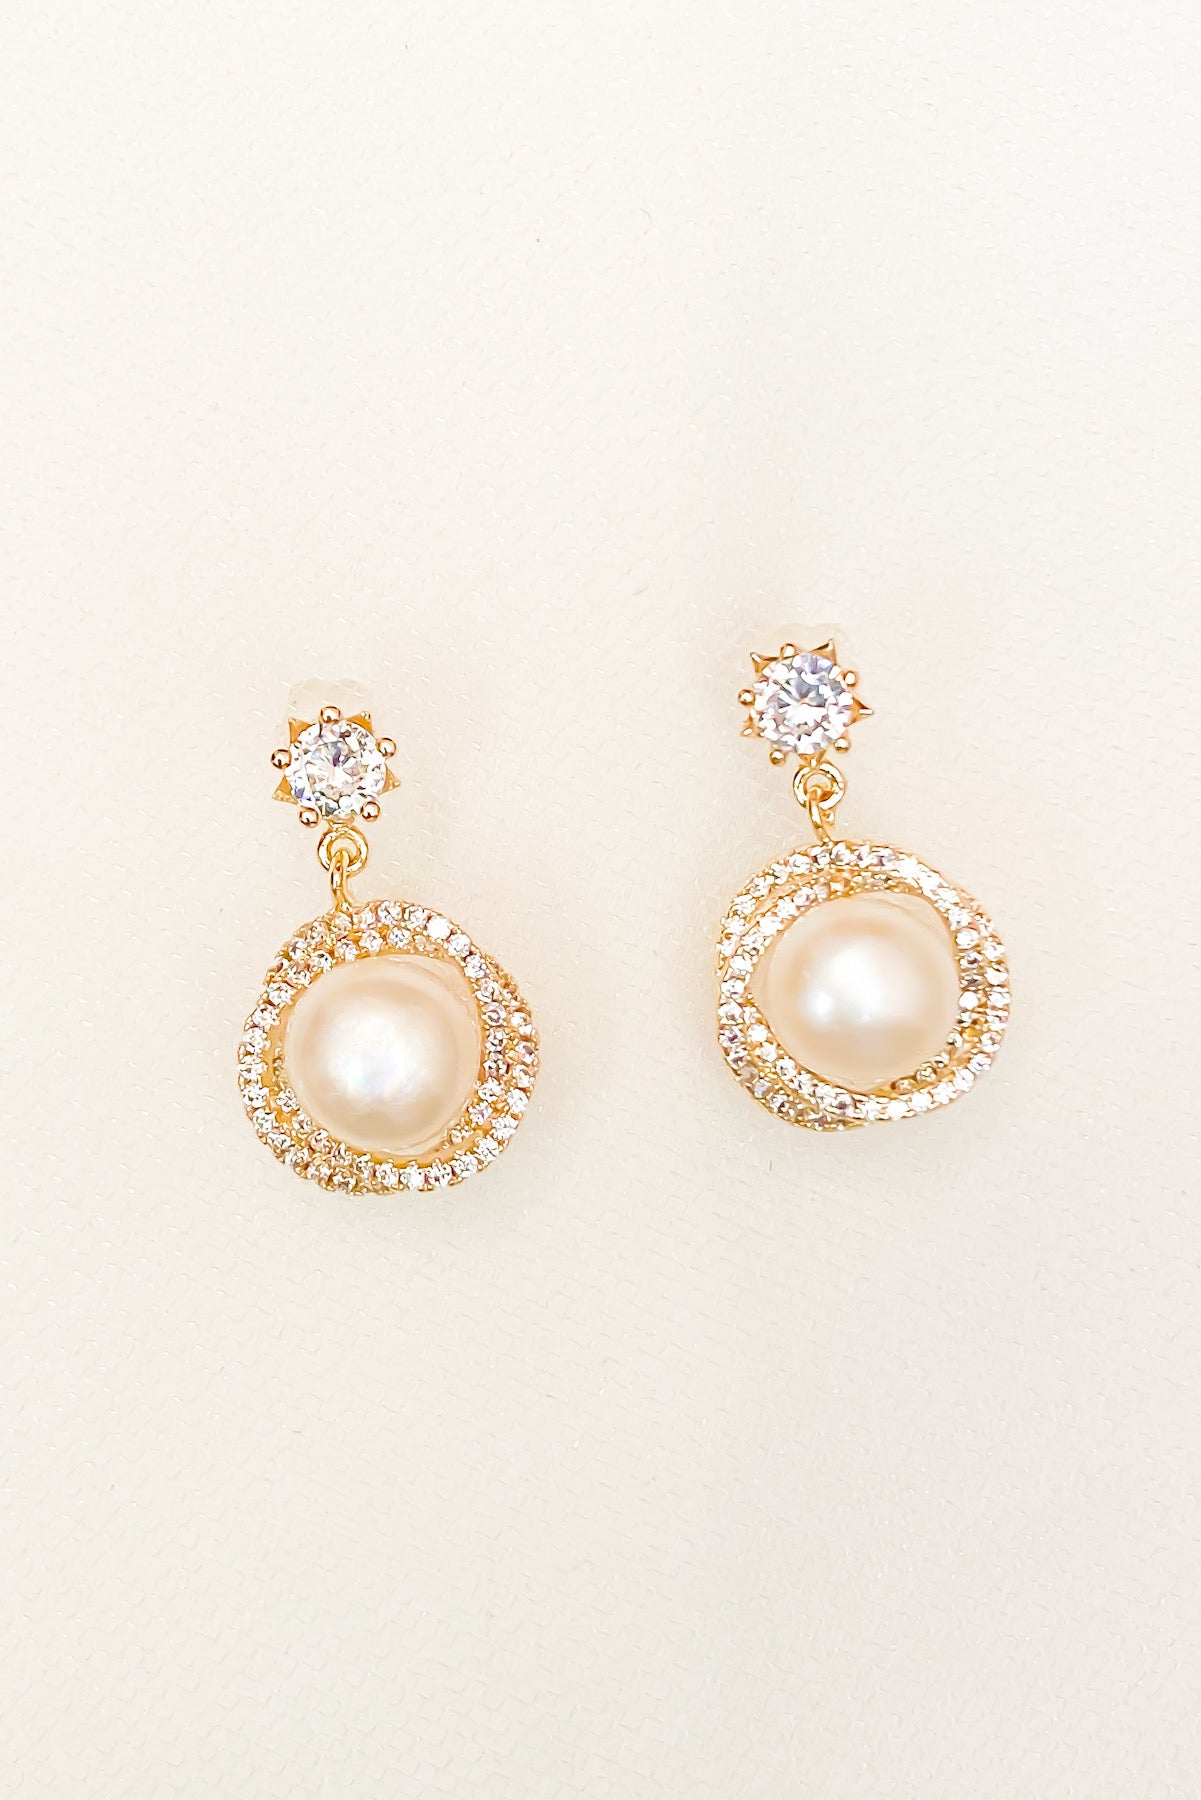 SKYE San Francisco Shop SF Chic Modern Elegant Classy Women Jewelry French Parisian Minimalist Alexandrine 18K Gold Crystal Pearl Earrings 6